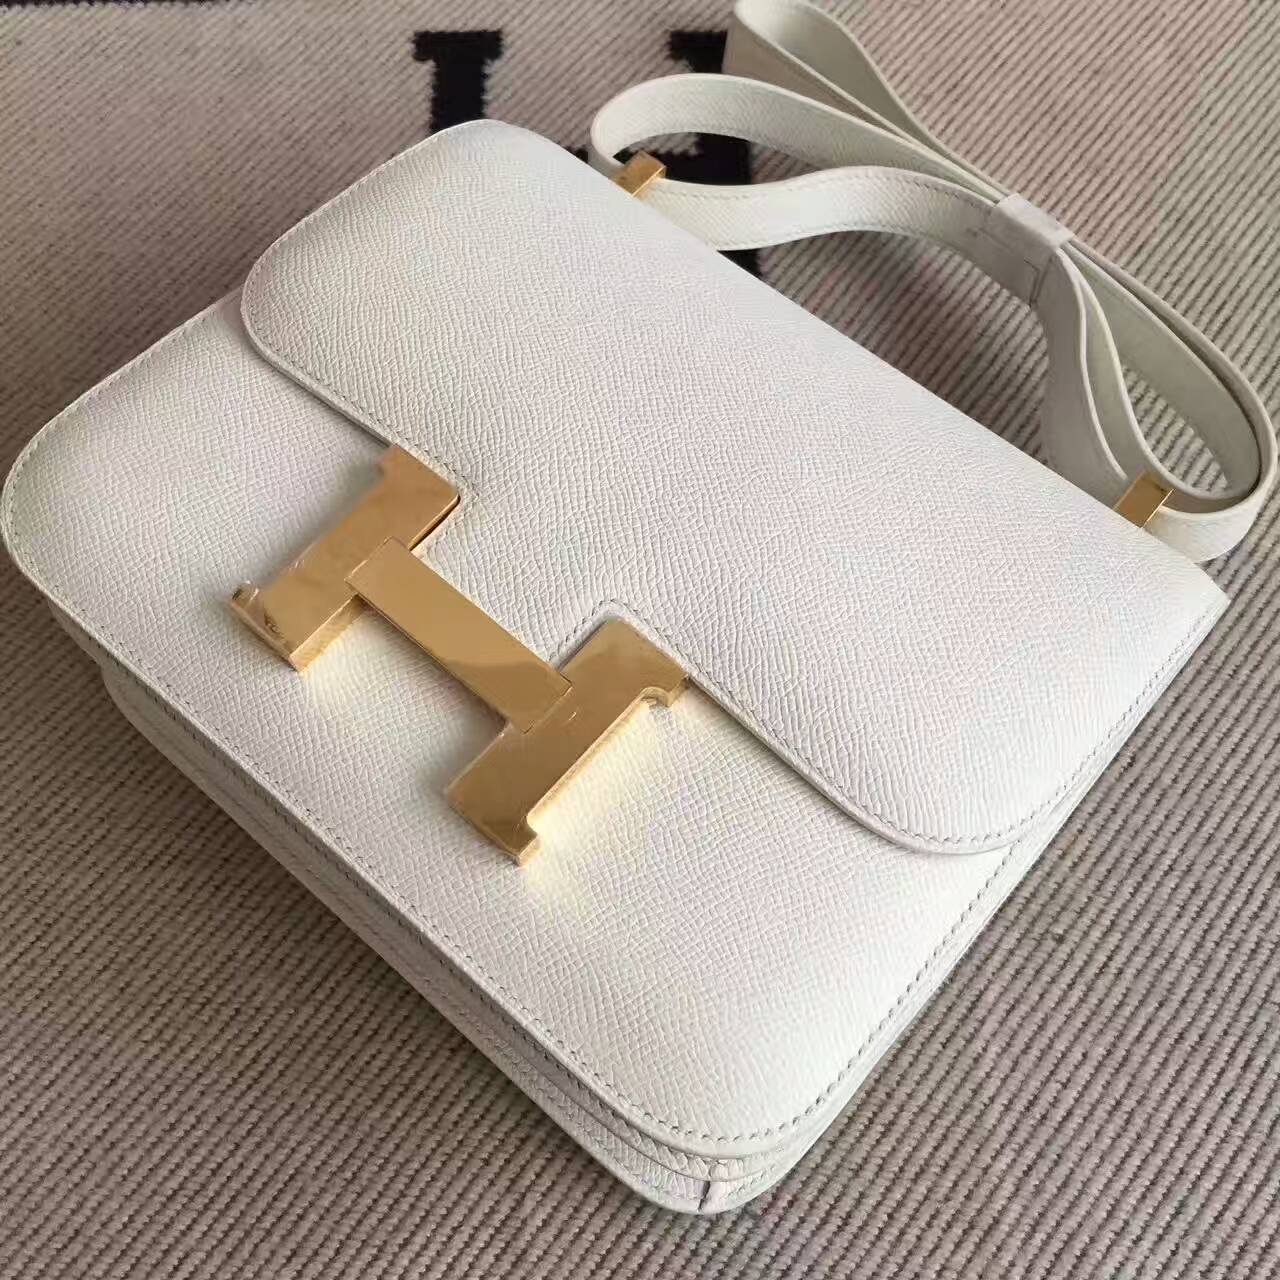 Fashion Hermes 01 Pure White Epsom Calfskin Leather Constance Bag 24cm